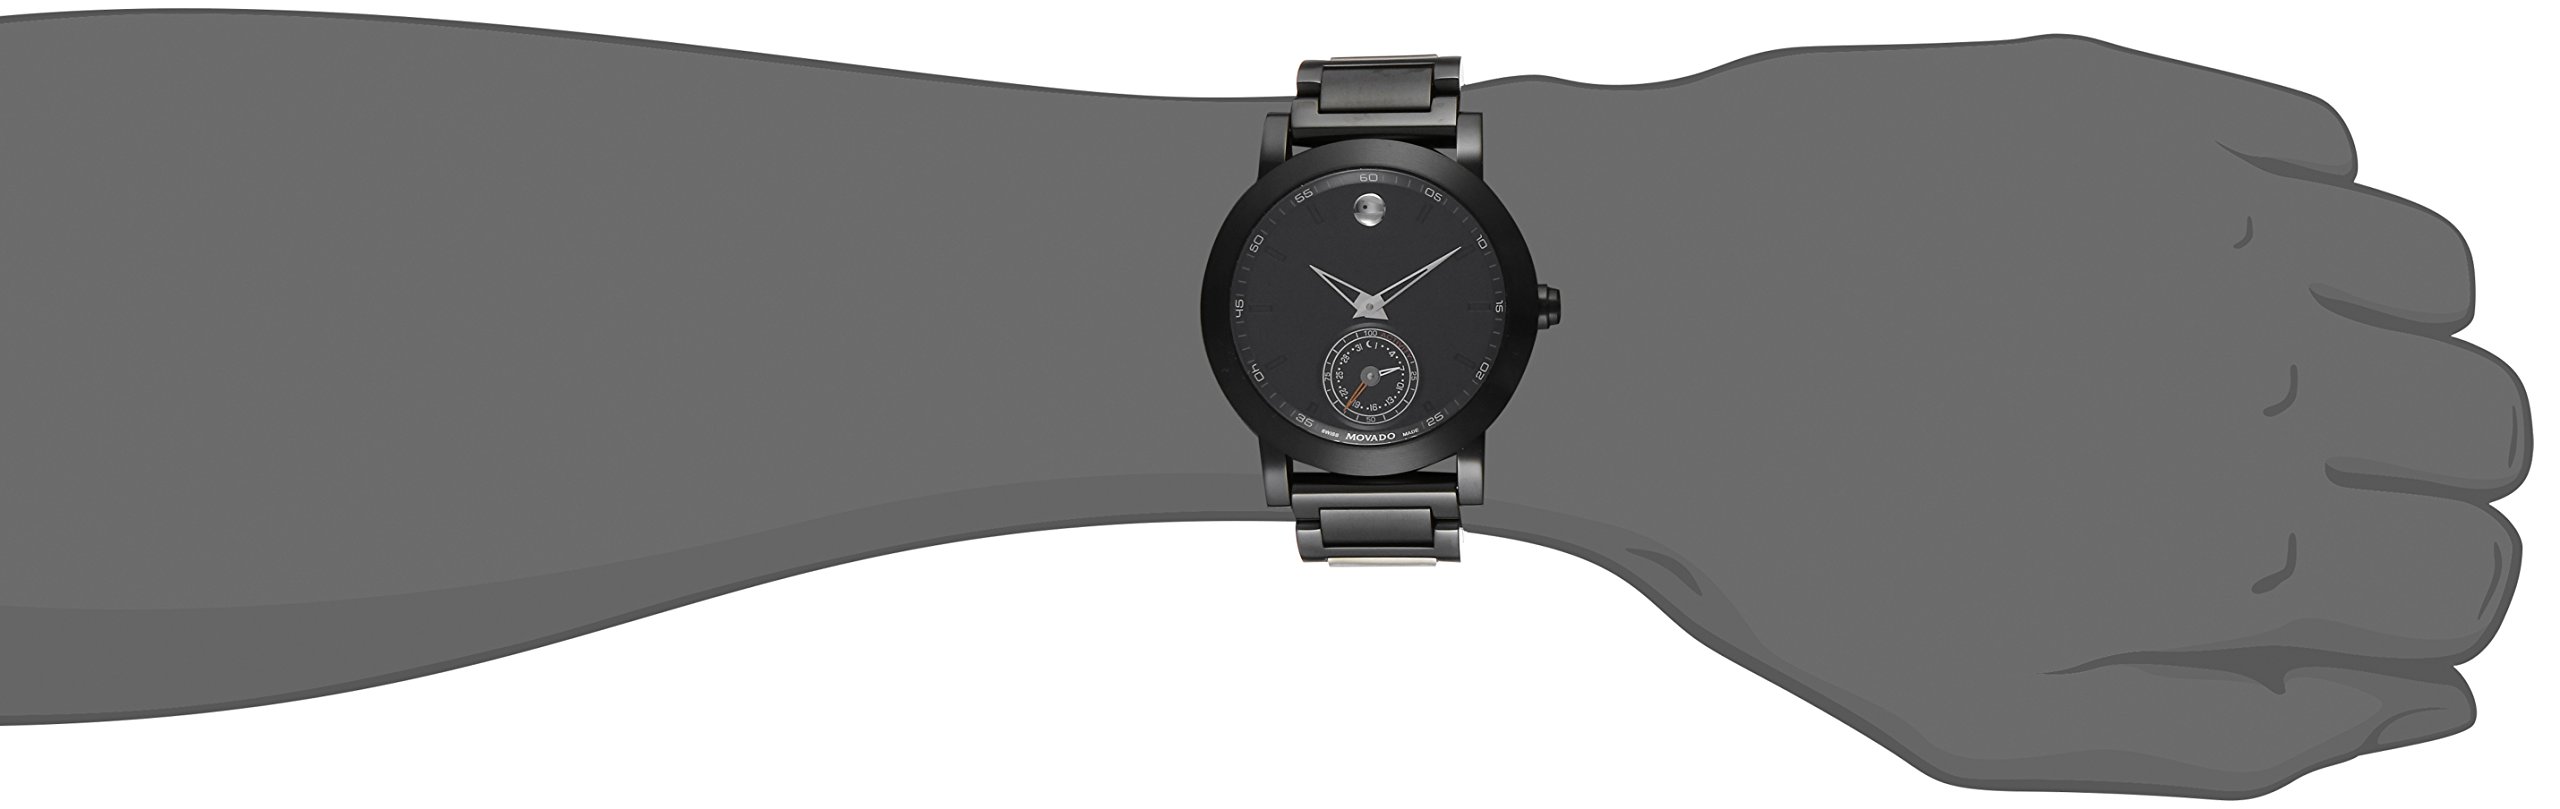 Movado Men's 0660002 Black Stainless Steel Smart Watch